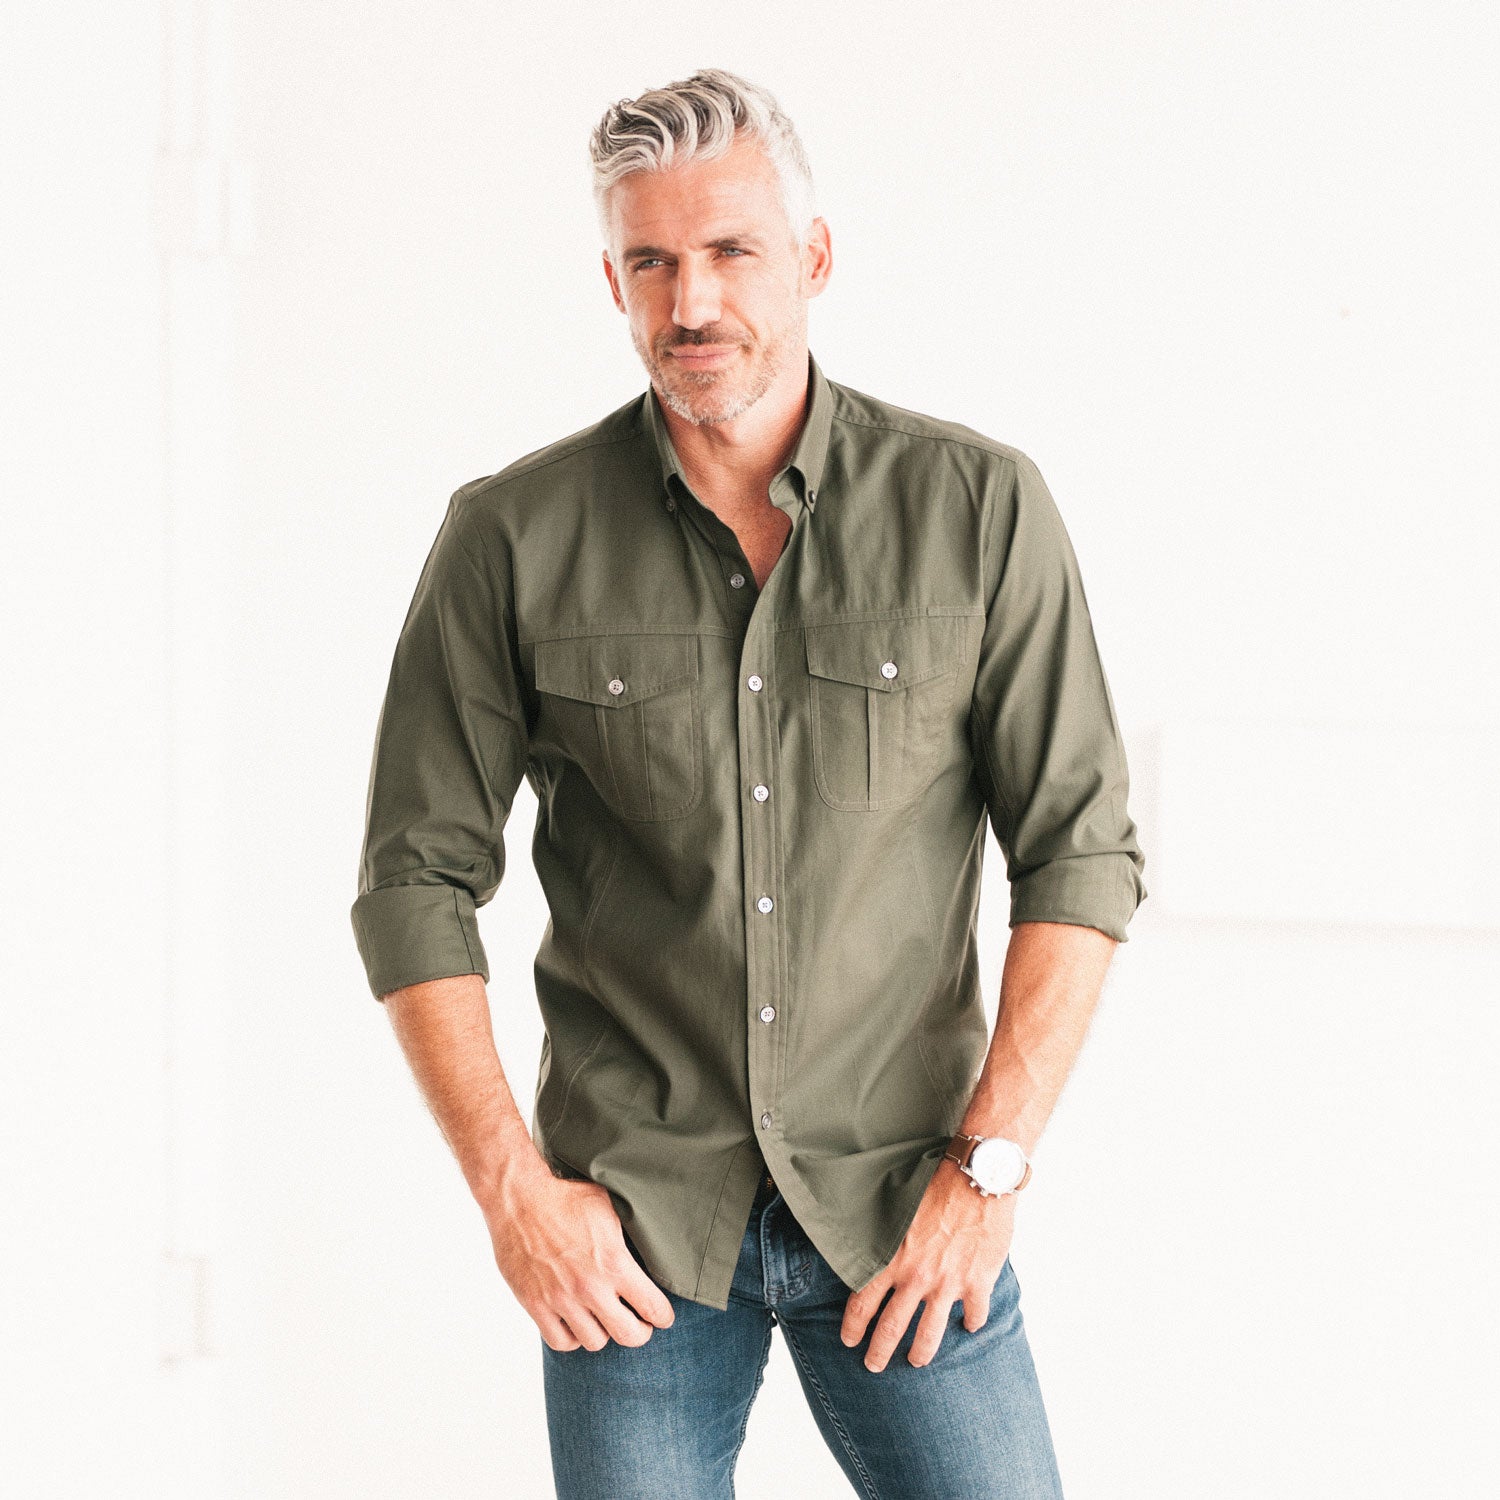 Men's Utility Shirt - Editor in Olive Green | Batch